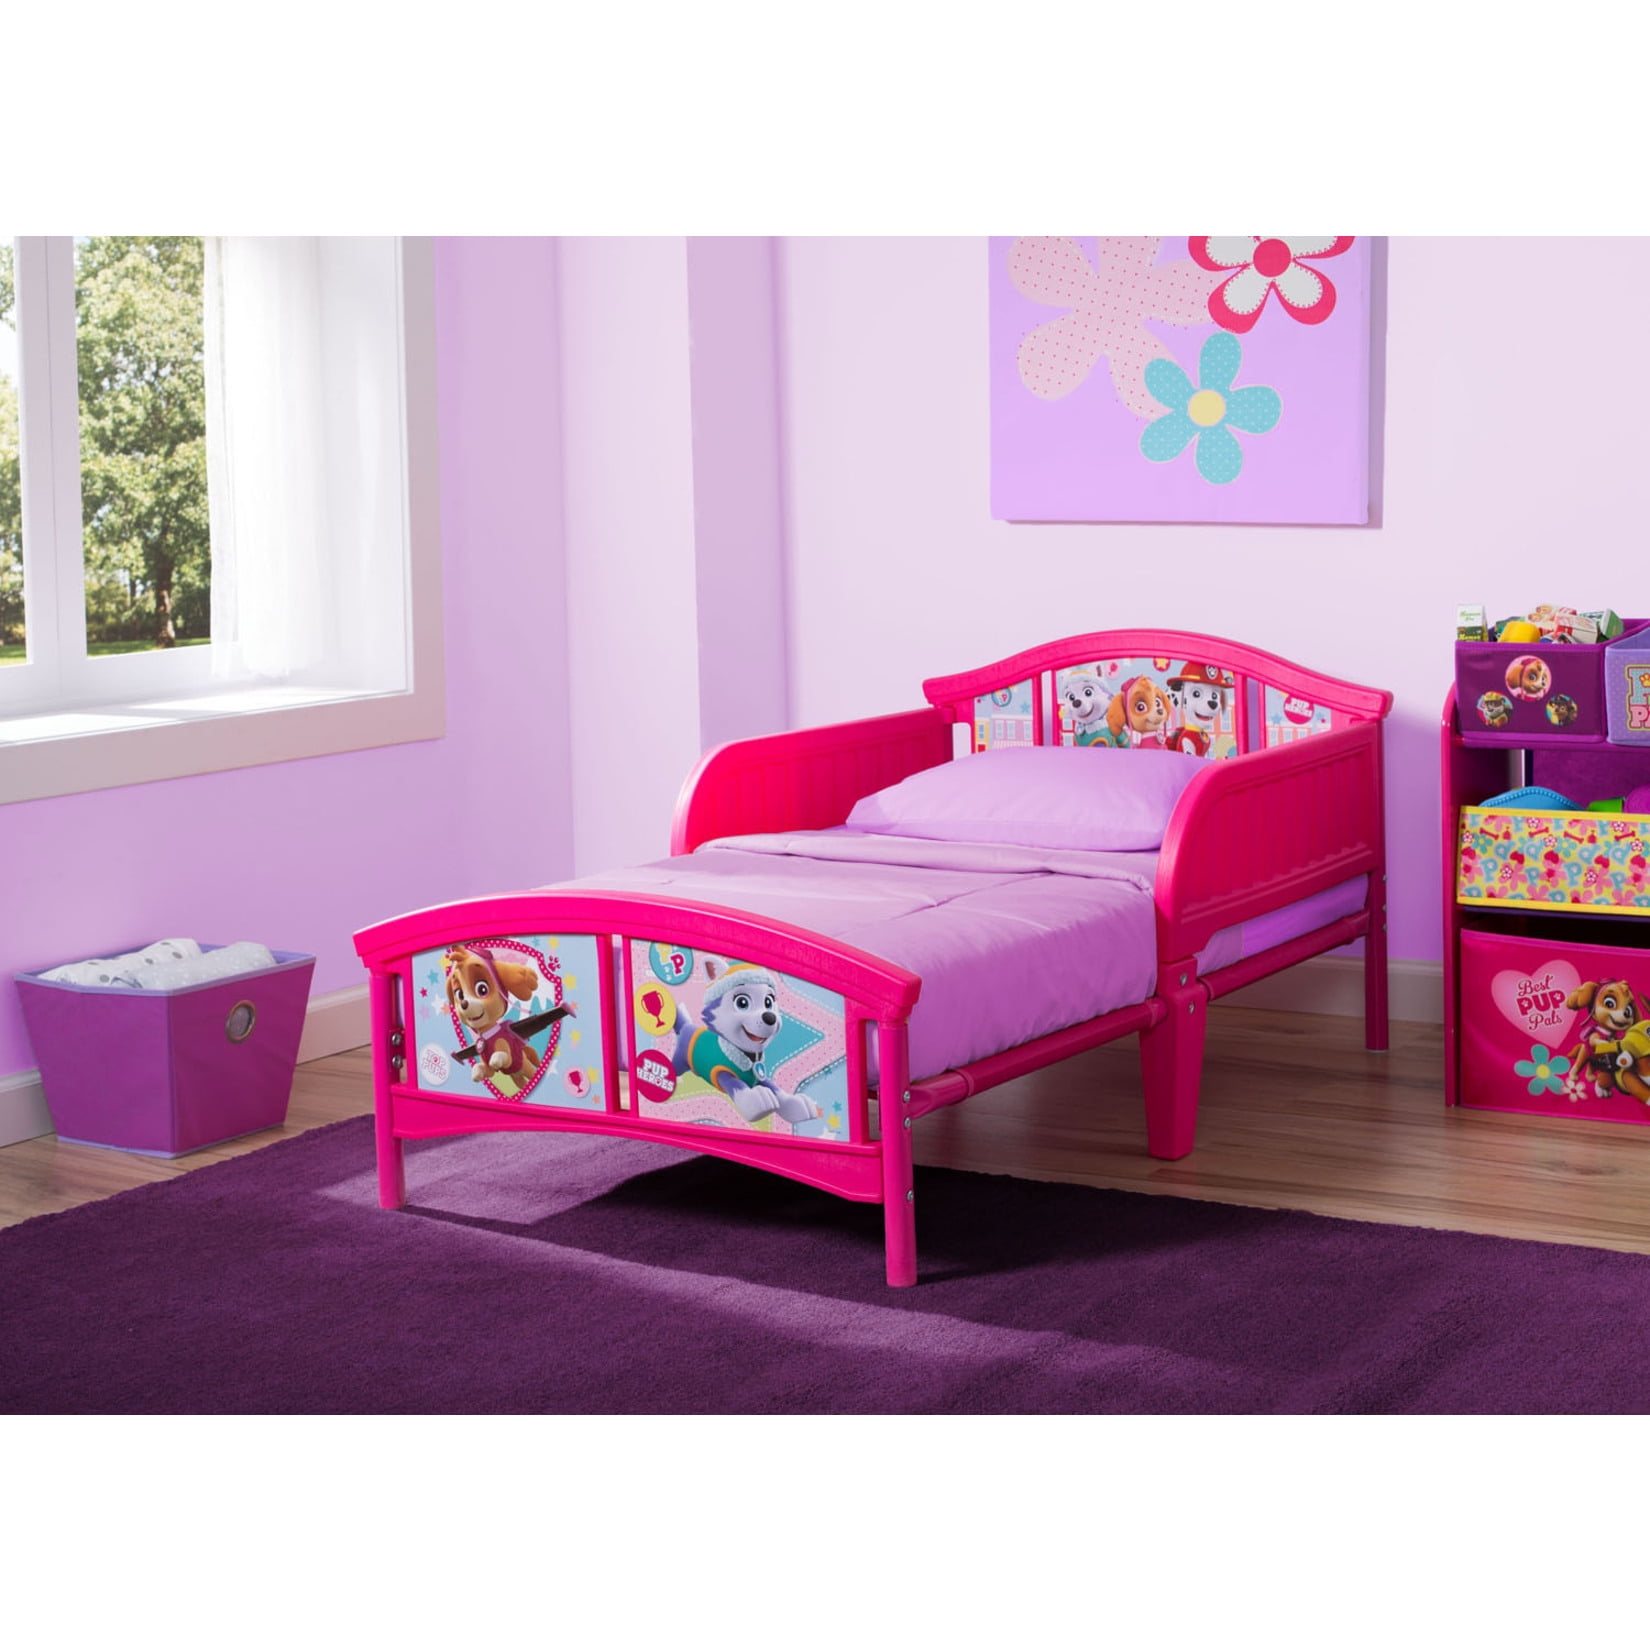 Wood Pink 142x77x68 cm Hello Home Paw Patrol Skye Kids Toddler Bed with underbed Storage 